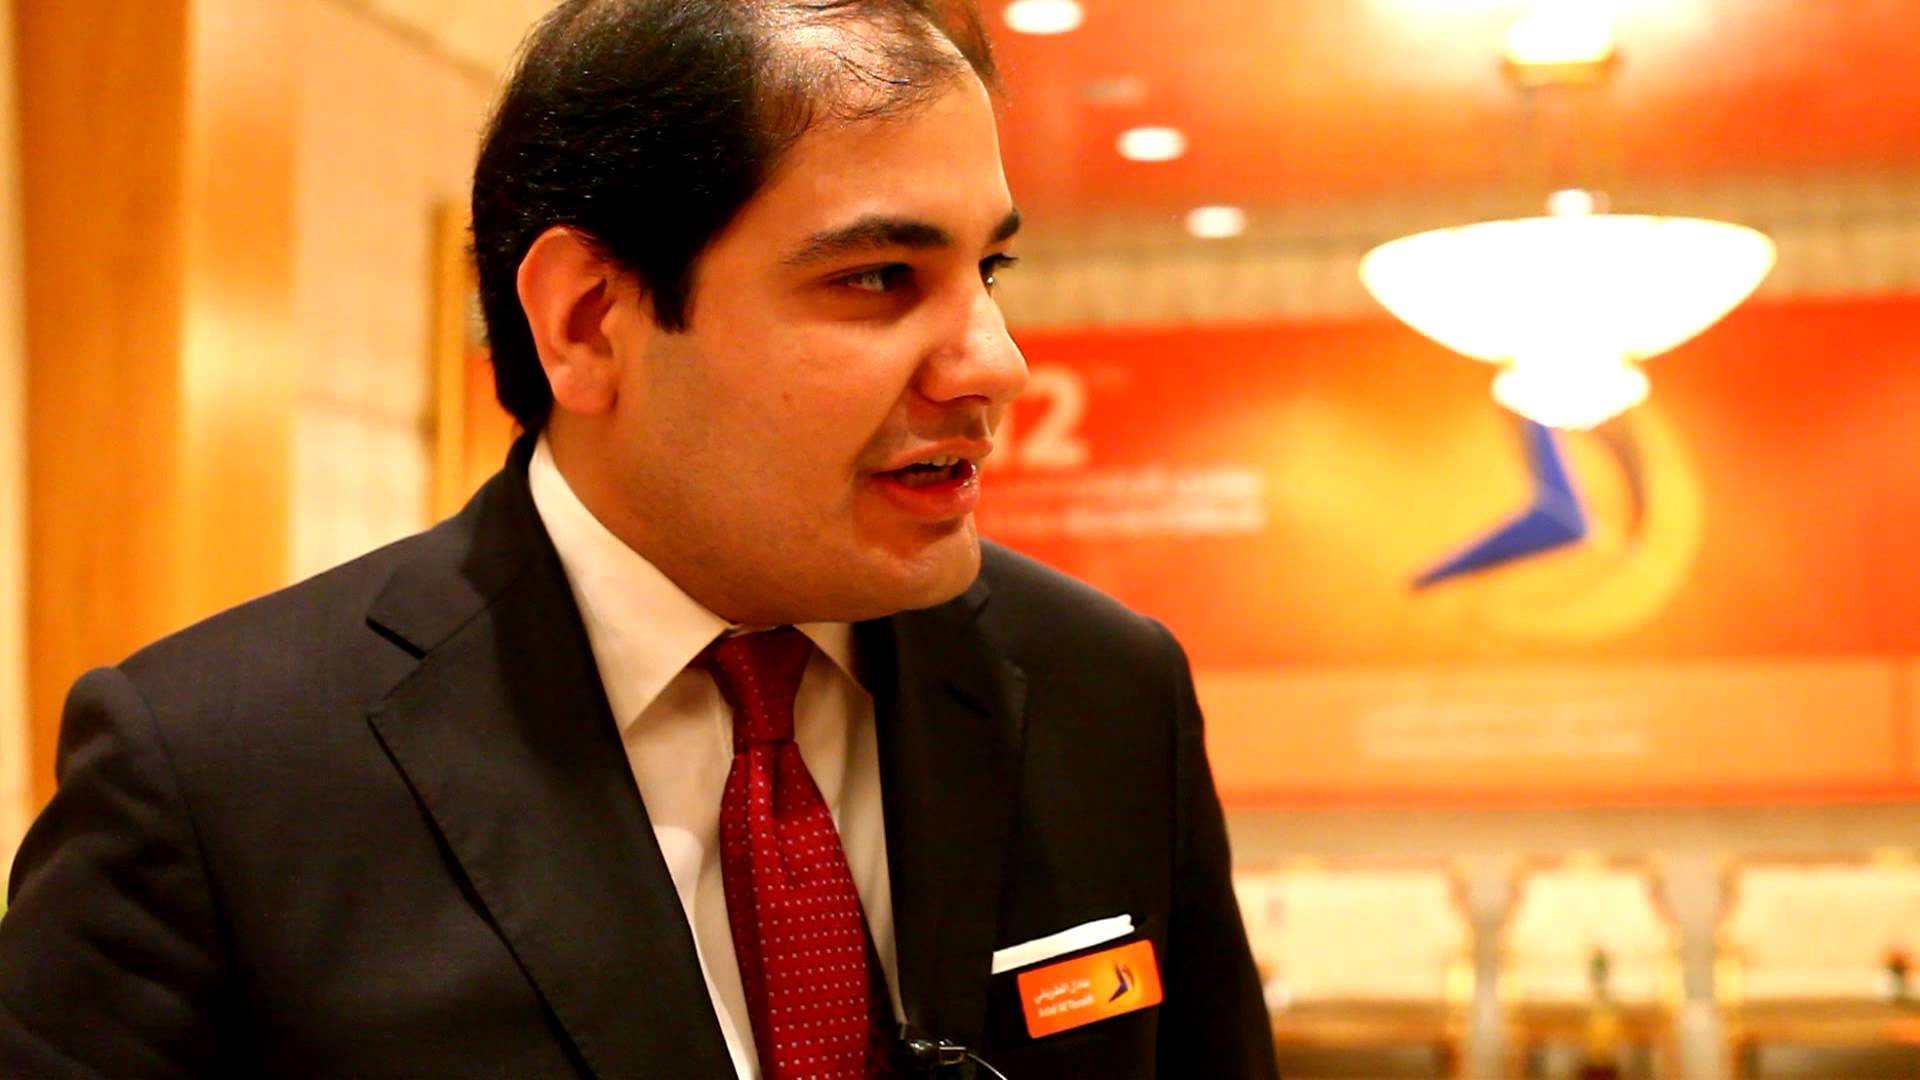 Adel Al Toraifi, Saudi Arabia's Culture and Information Ministry (photo: YouTube)